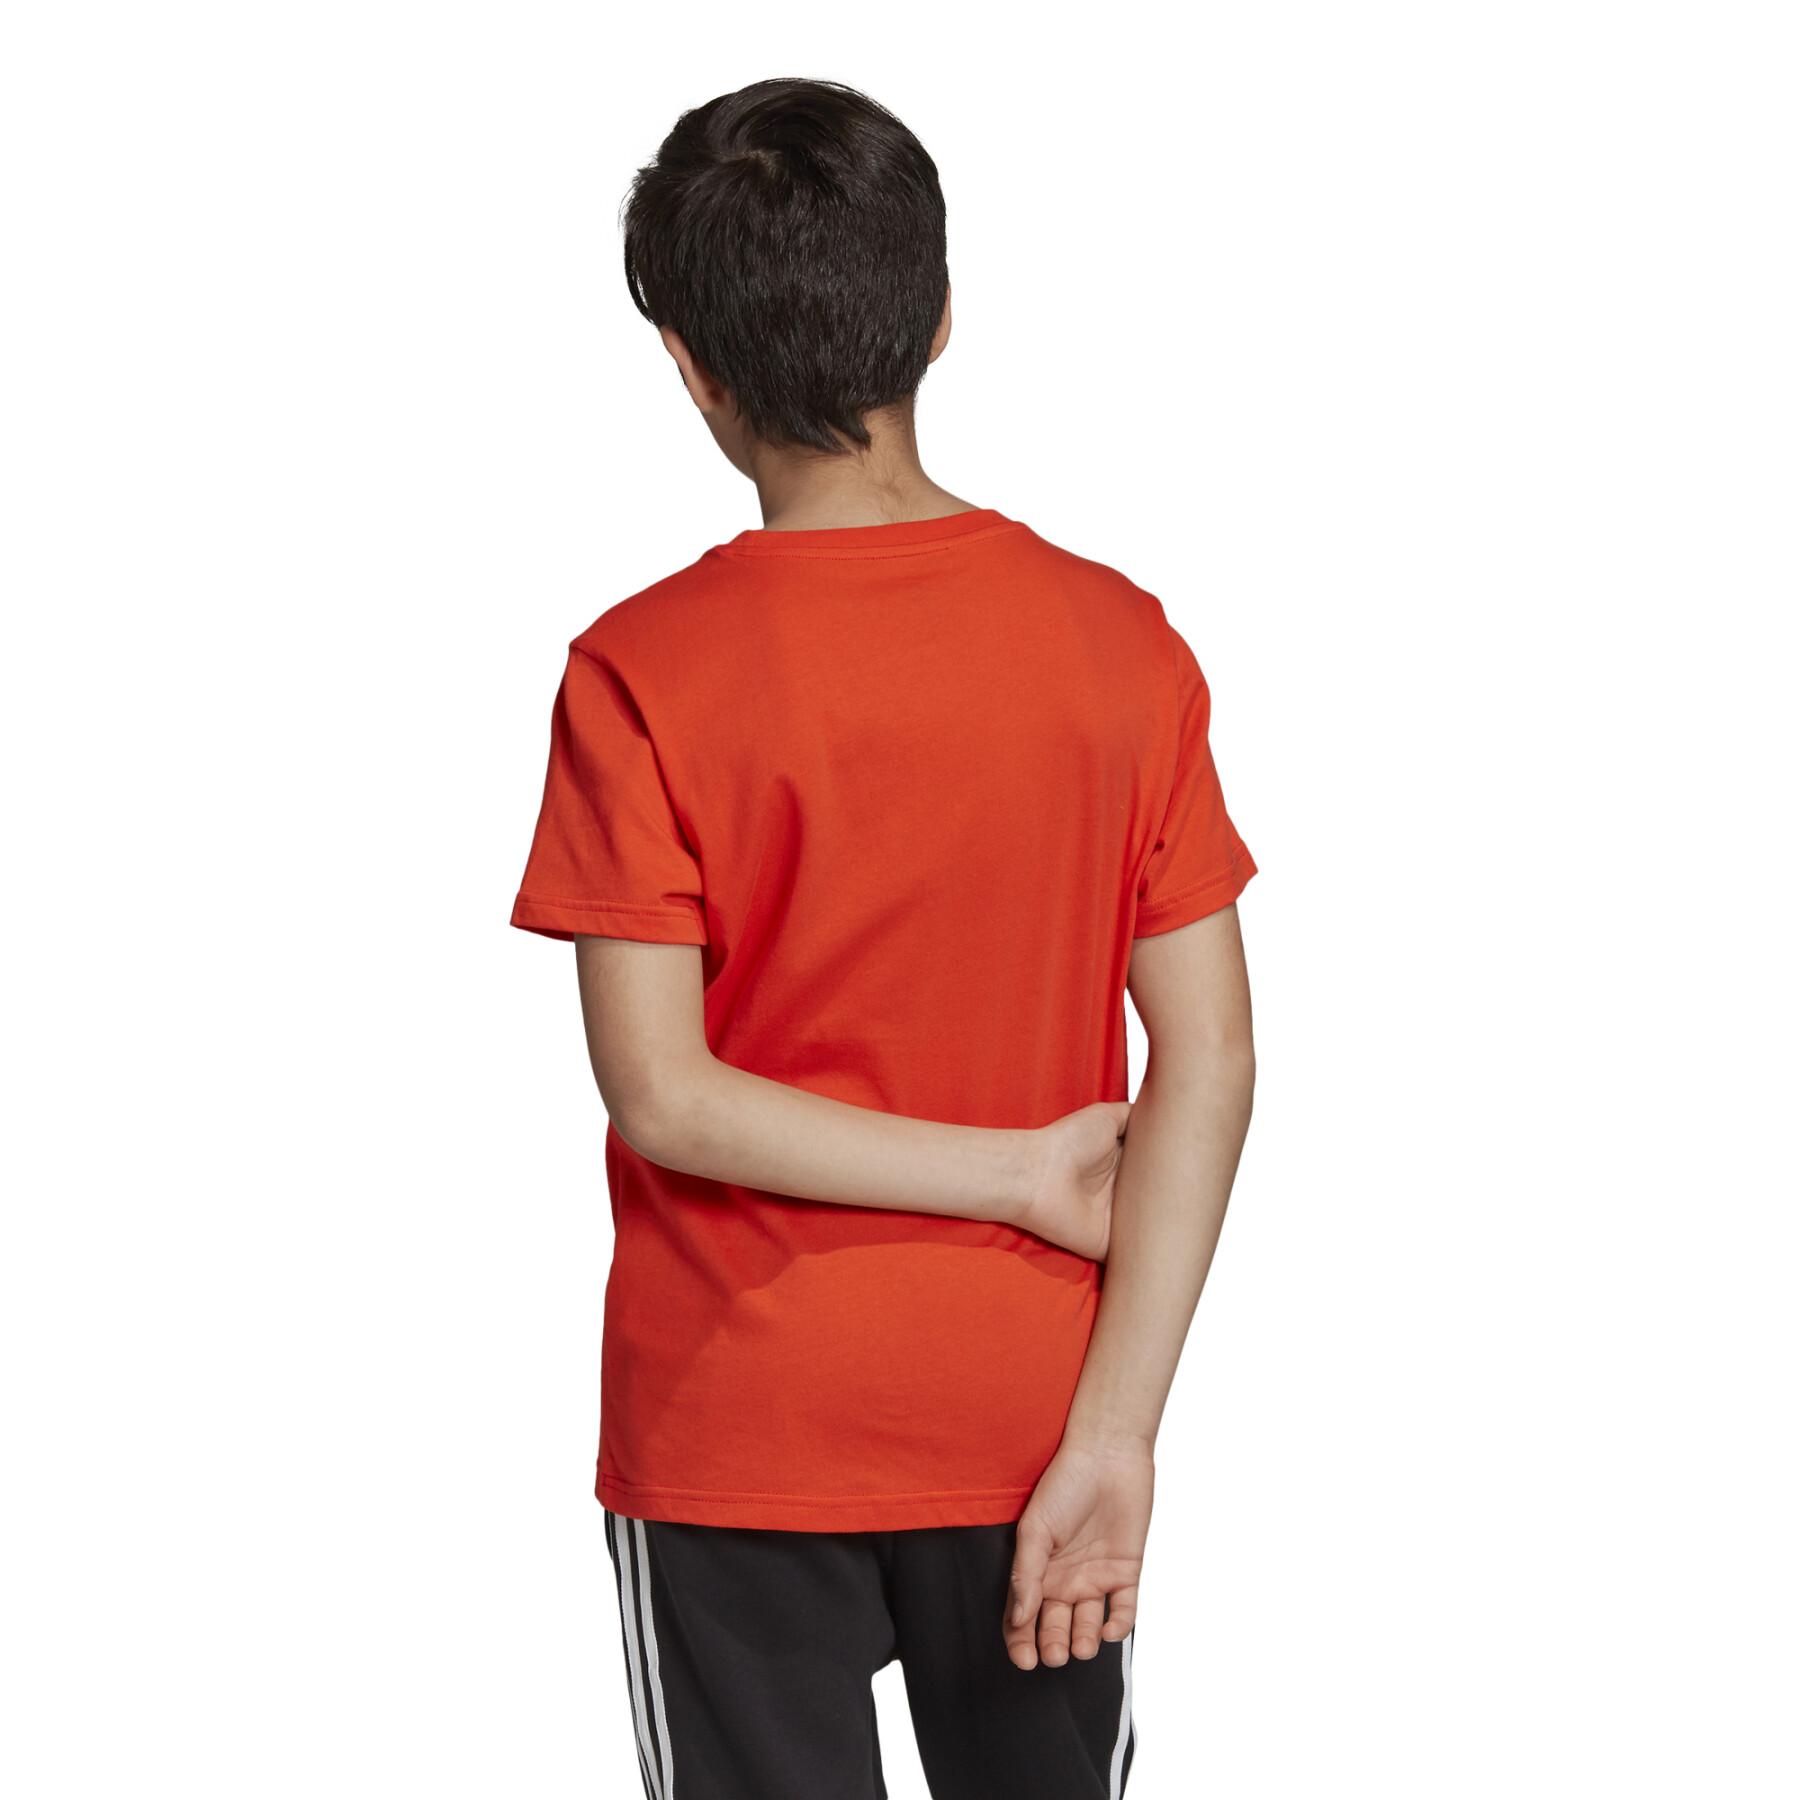 Kinder-T-shirt adidas Trefoil NC